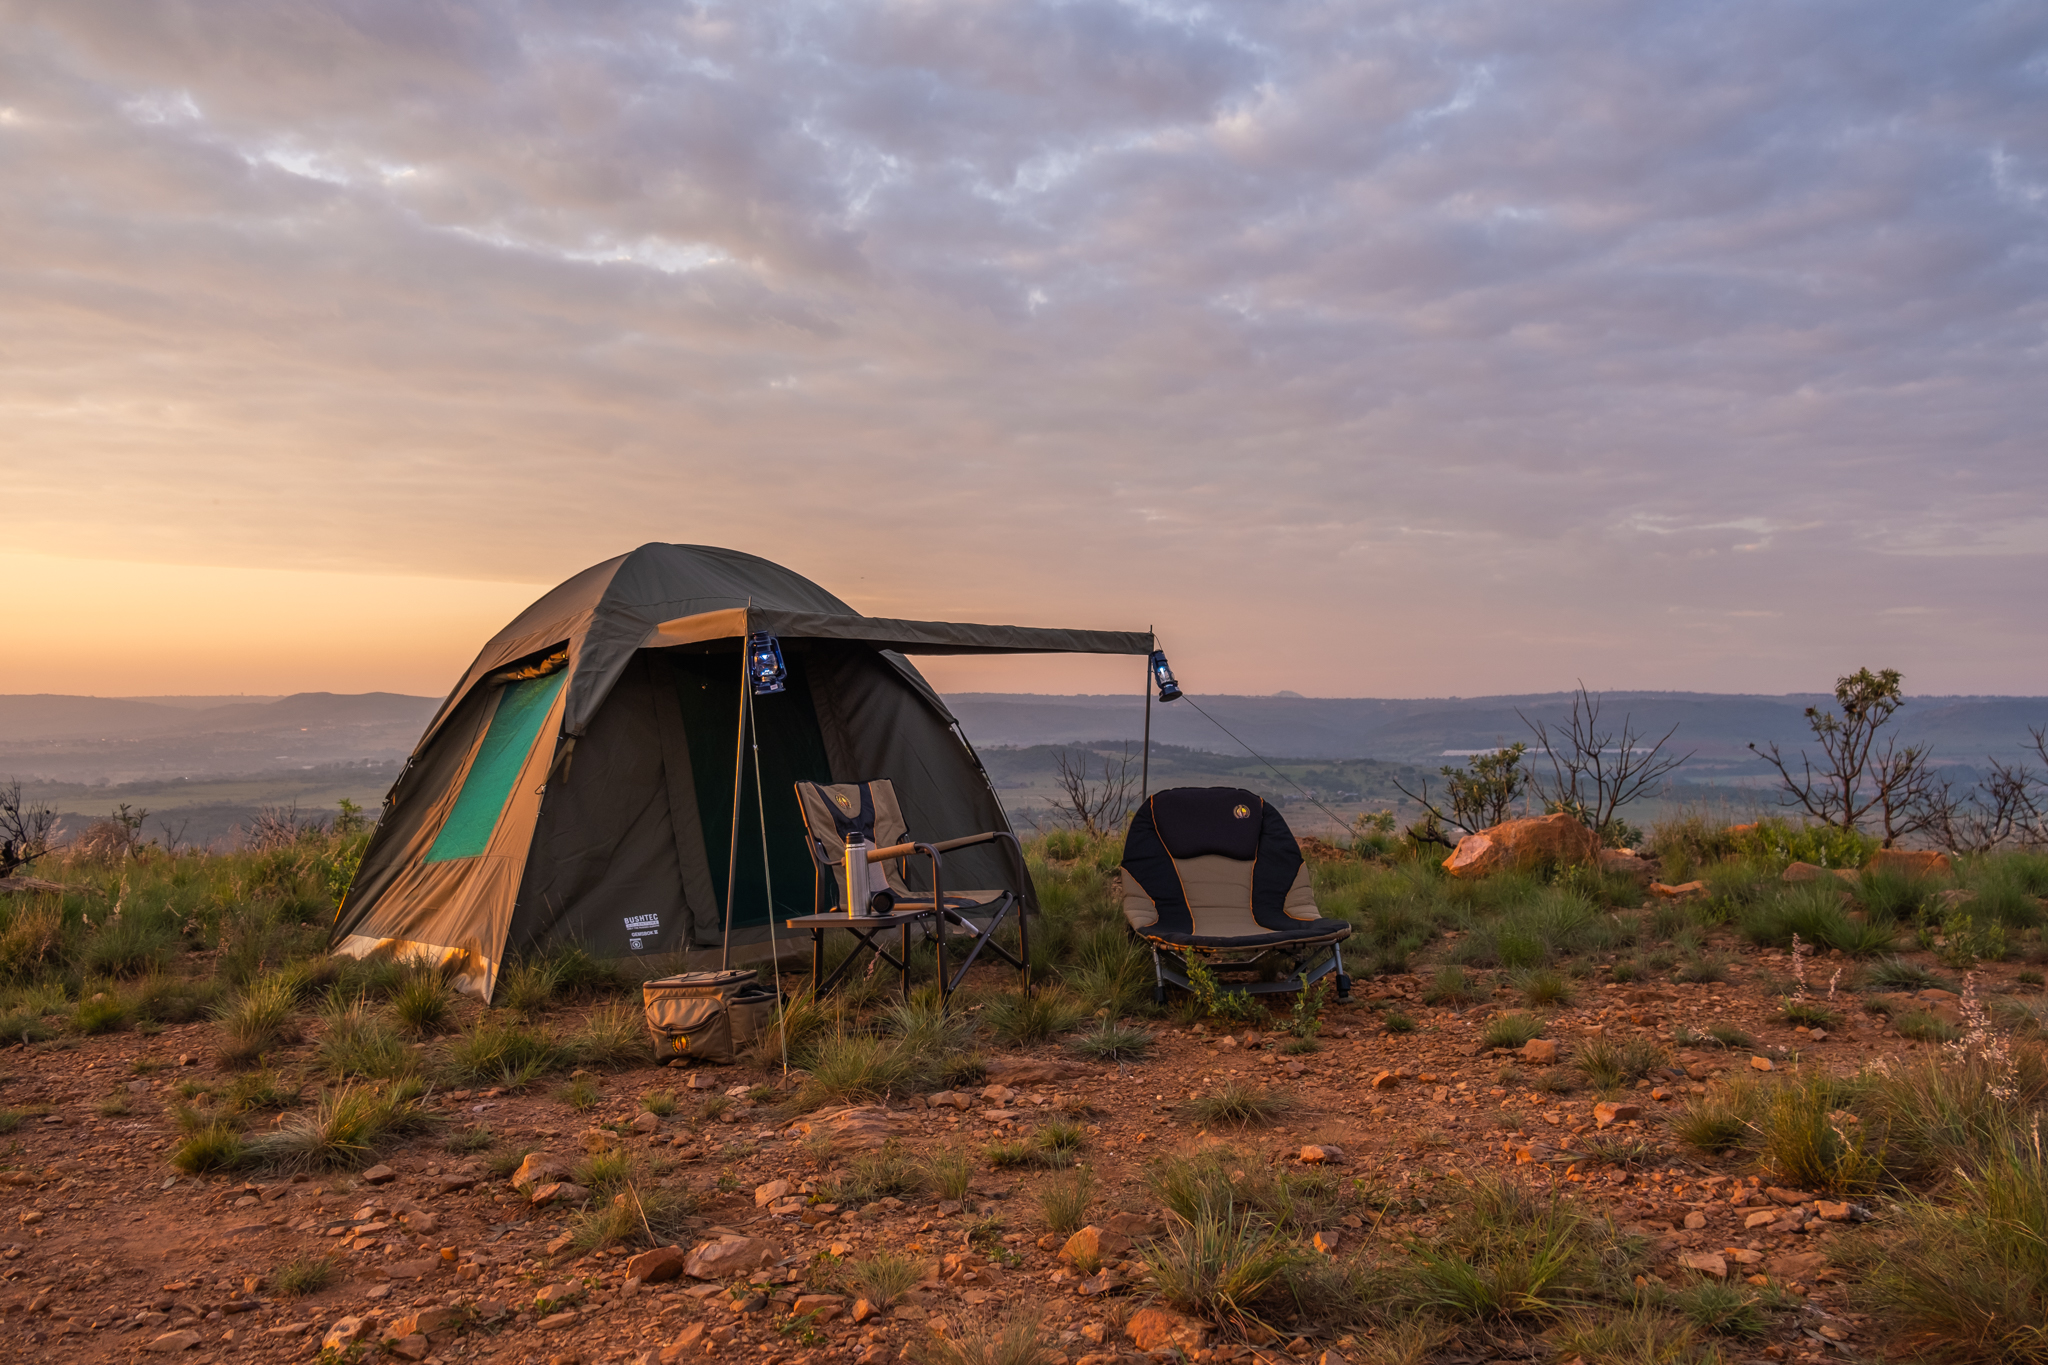 CORE® Equipment 4 Person Cabin Tent Setup Video 